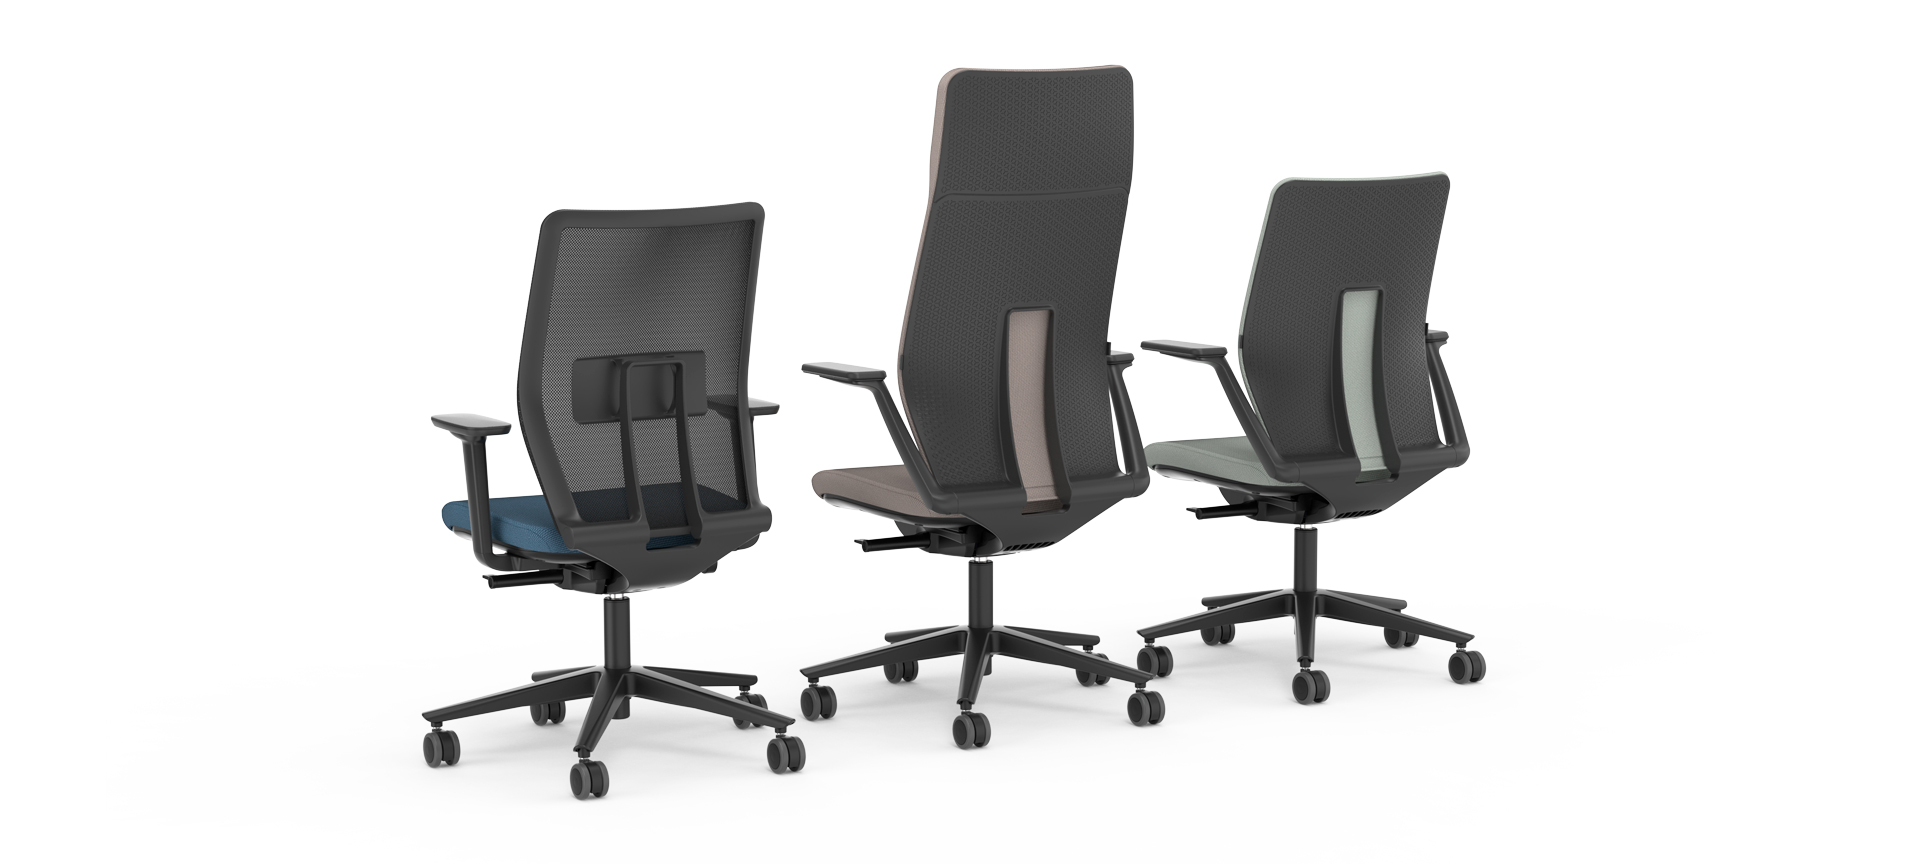 Monza task chair range by Formetiq